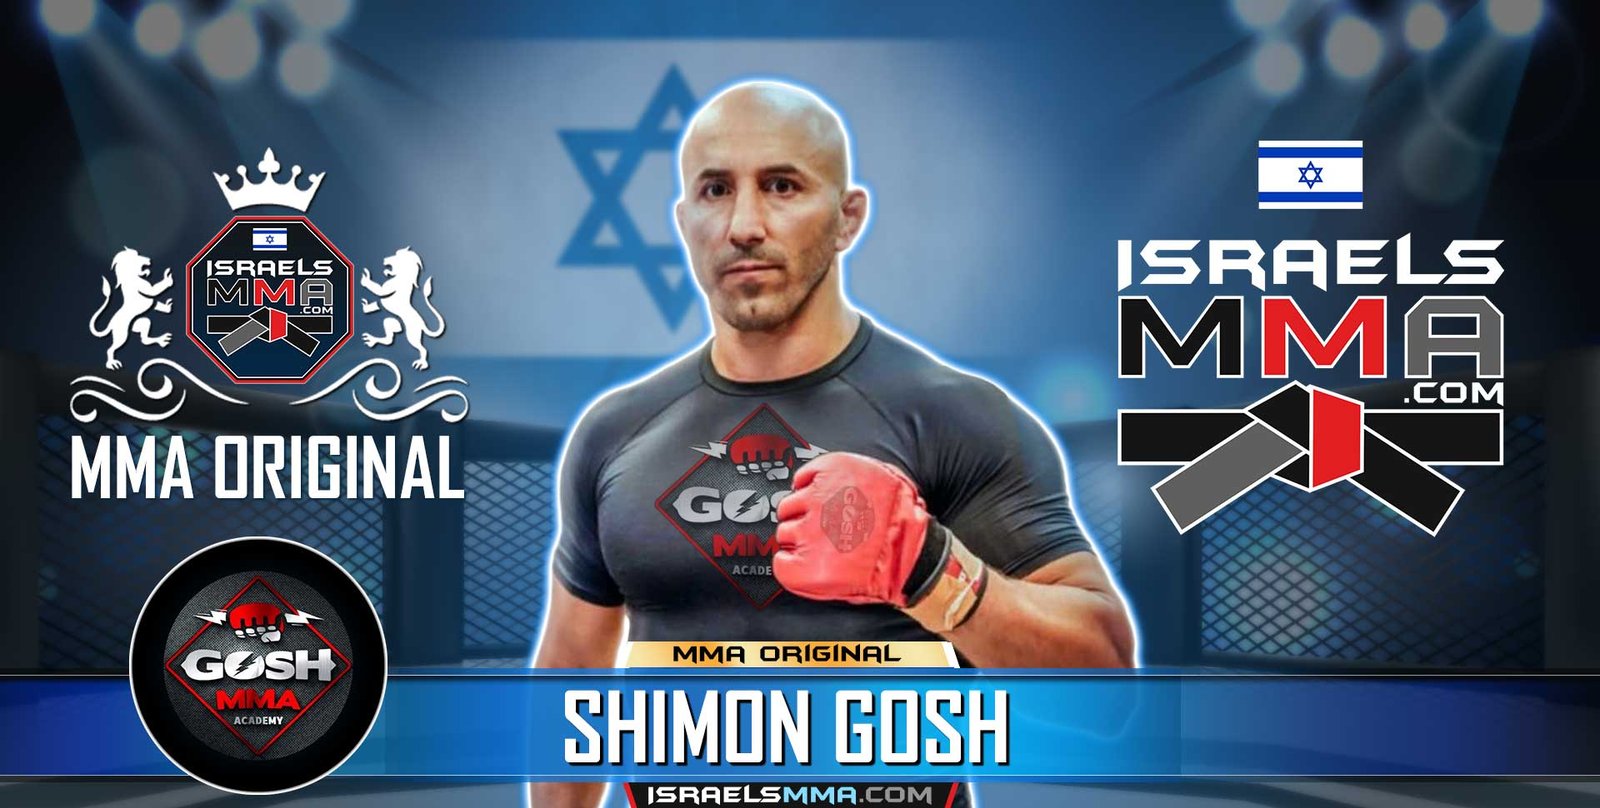 Shimon Gosh